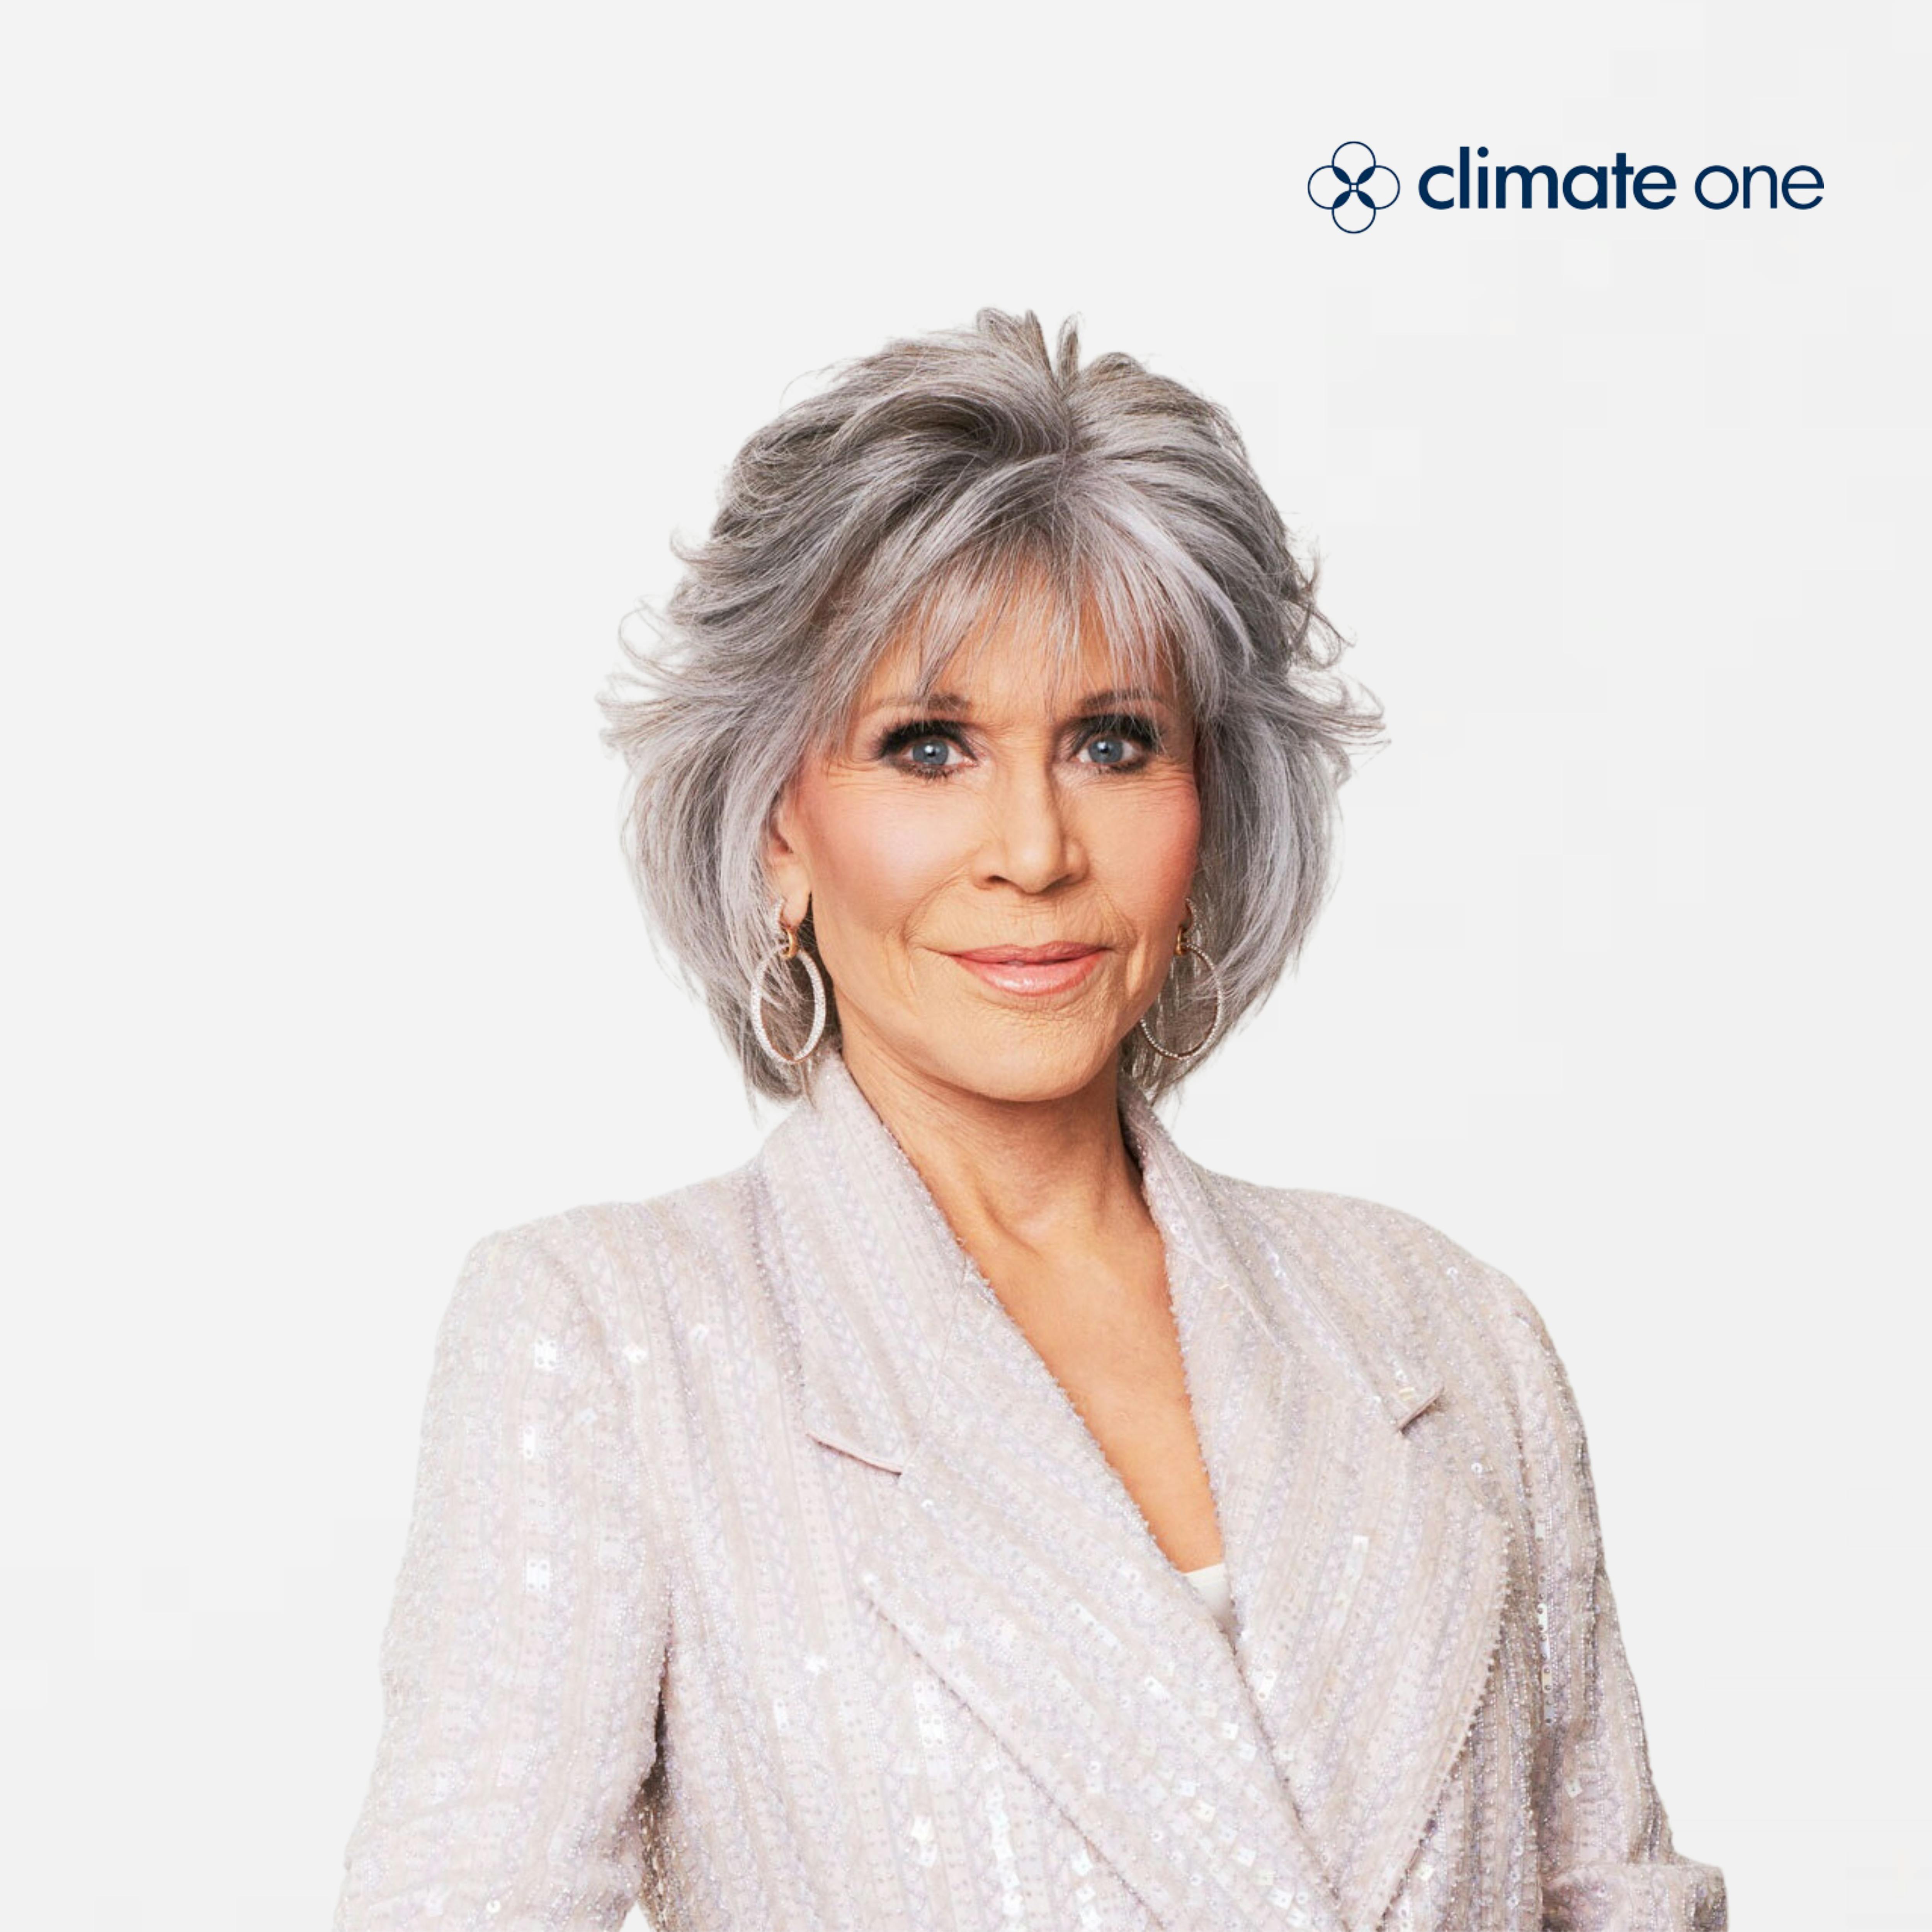 CLIMATE ONE REWIND: Jane Fonda: A Lifetime of Activism